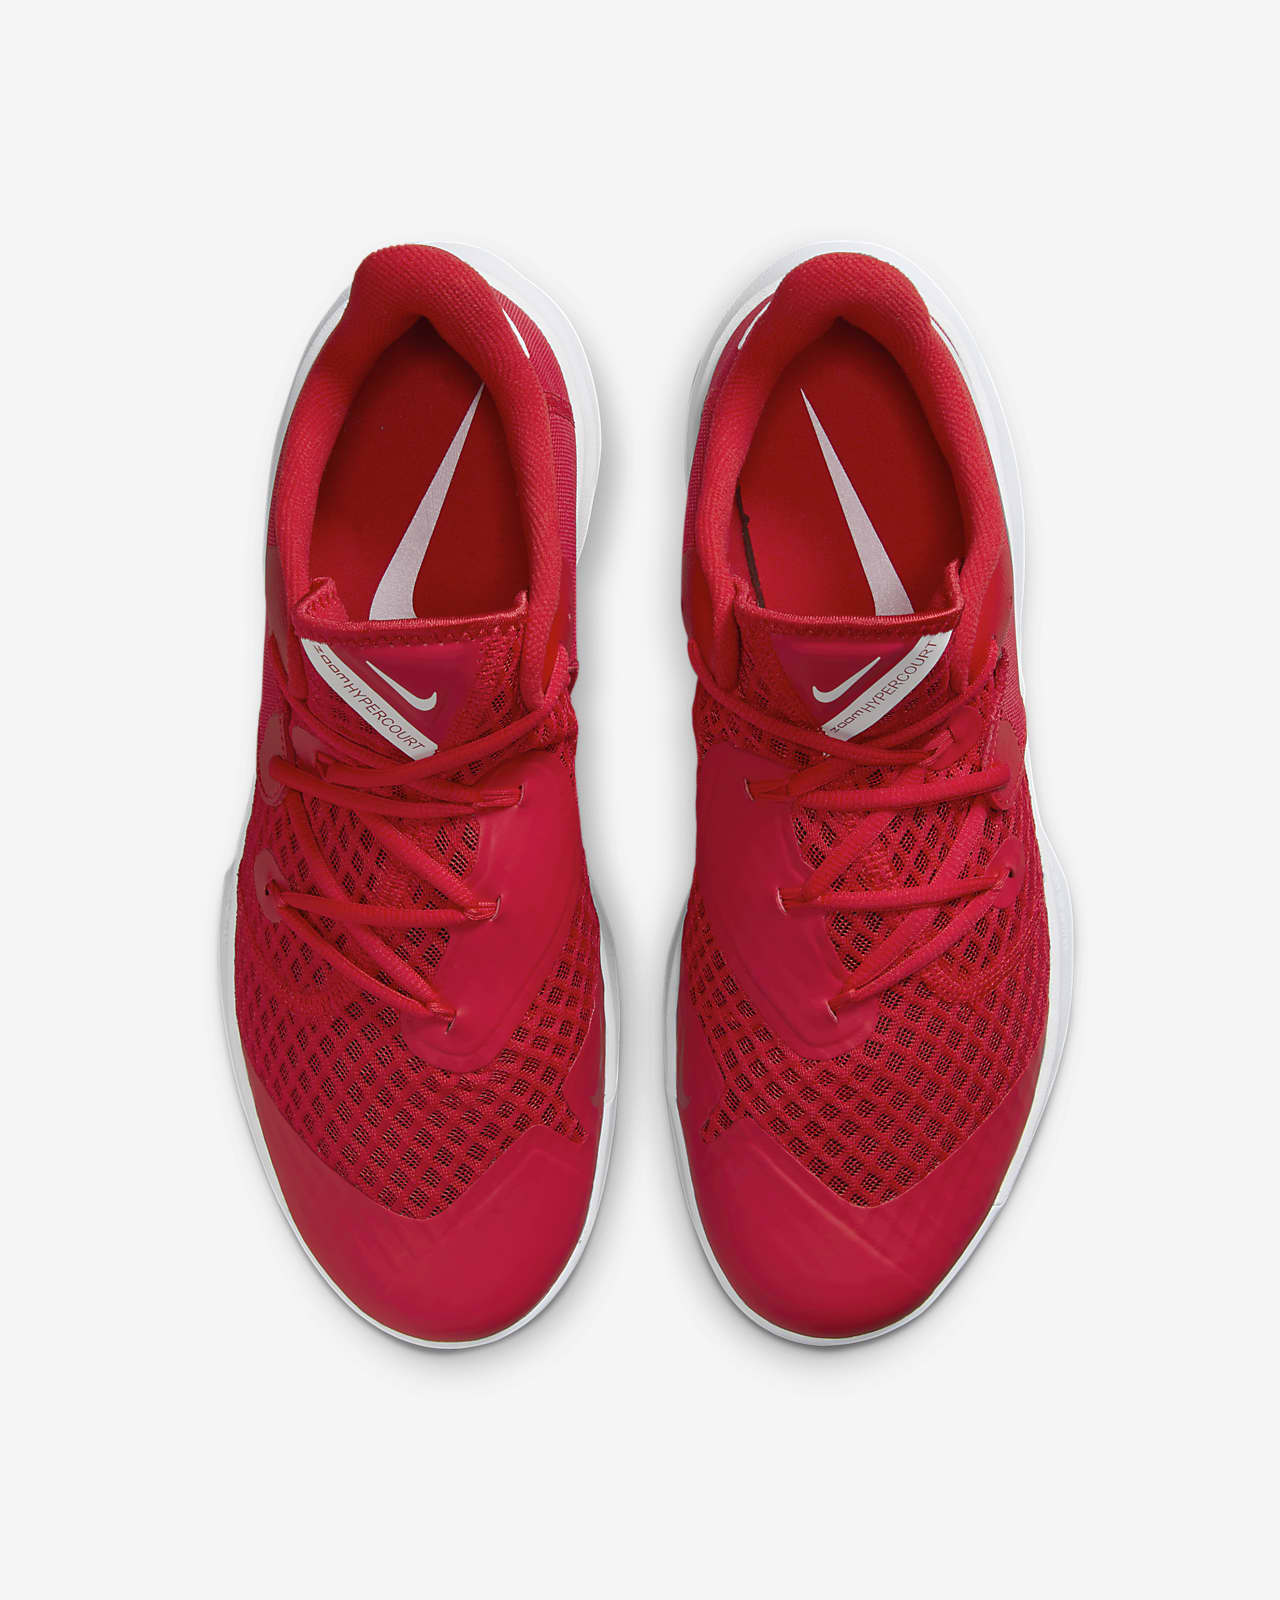 Zapatillas de balonmano Nike Zoom Hyperspeed Court SE